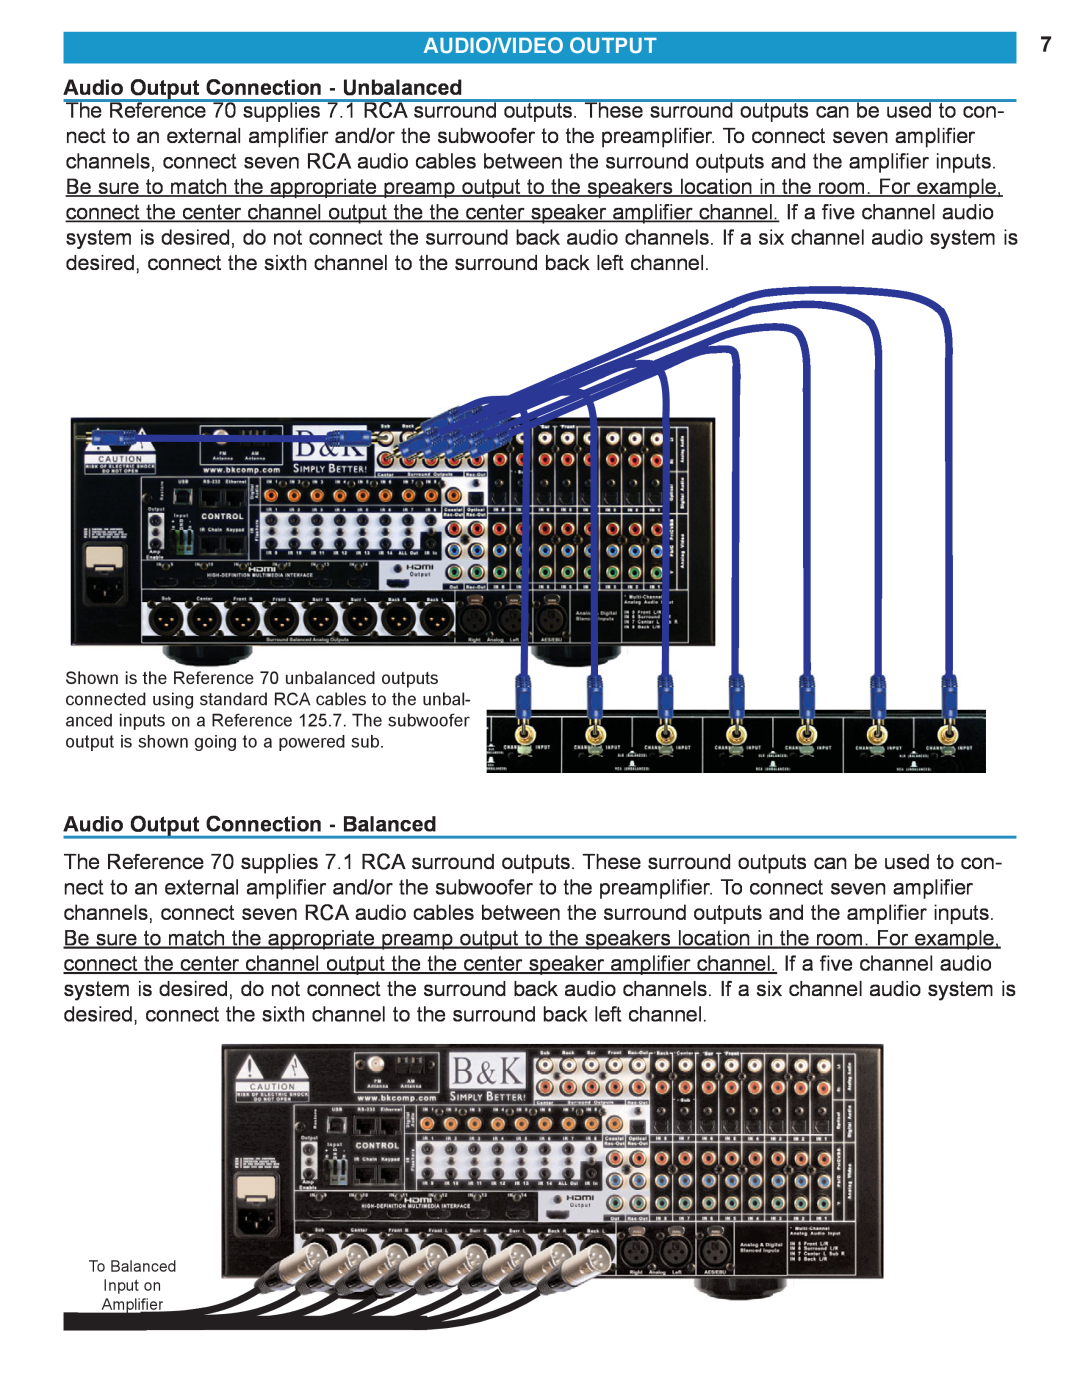 B&K HT 70 manual Audio/Video Output, Audio Output Connection - Unbalanced, Audio Output Connection - Balanced 